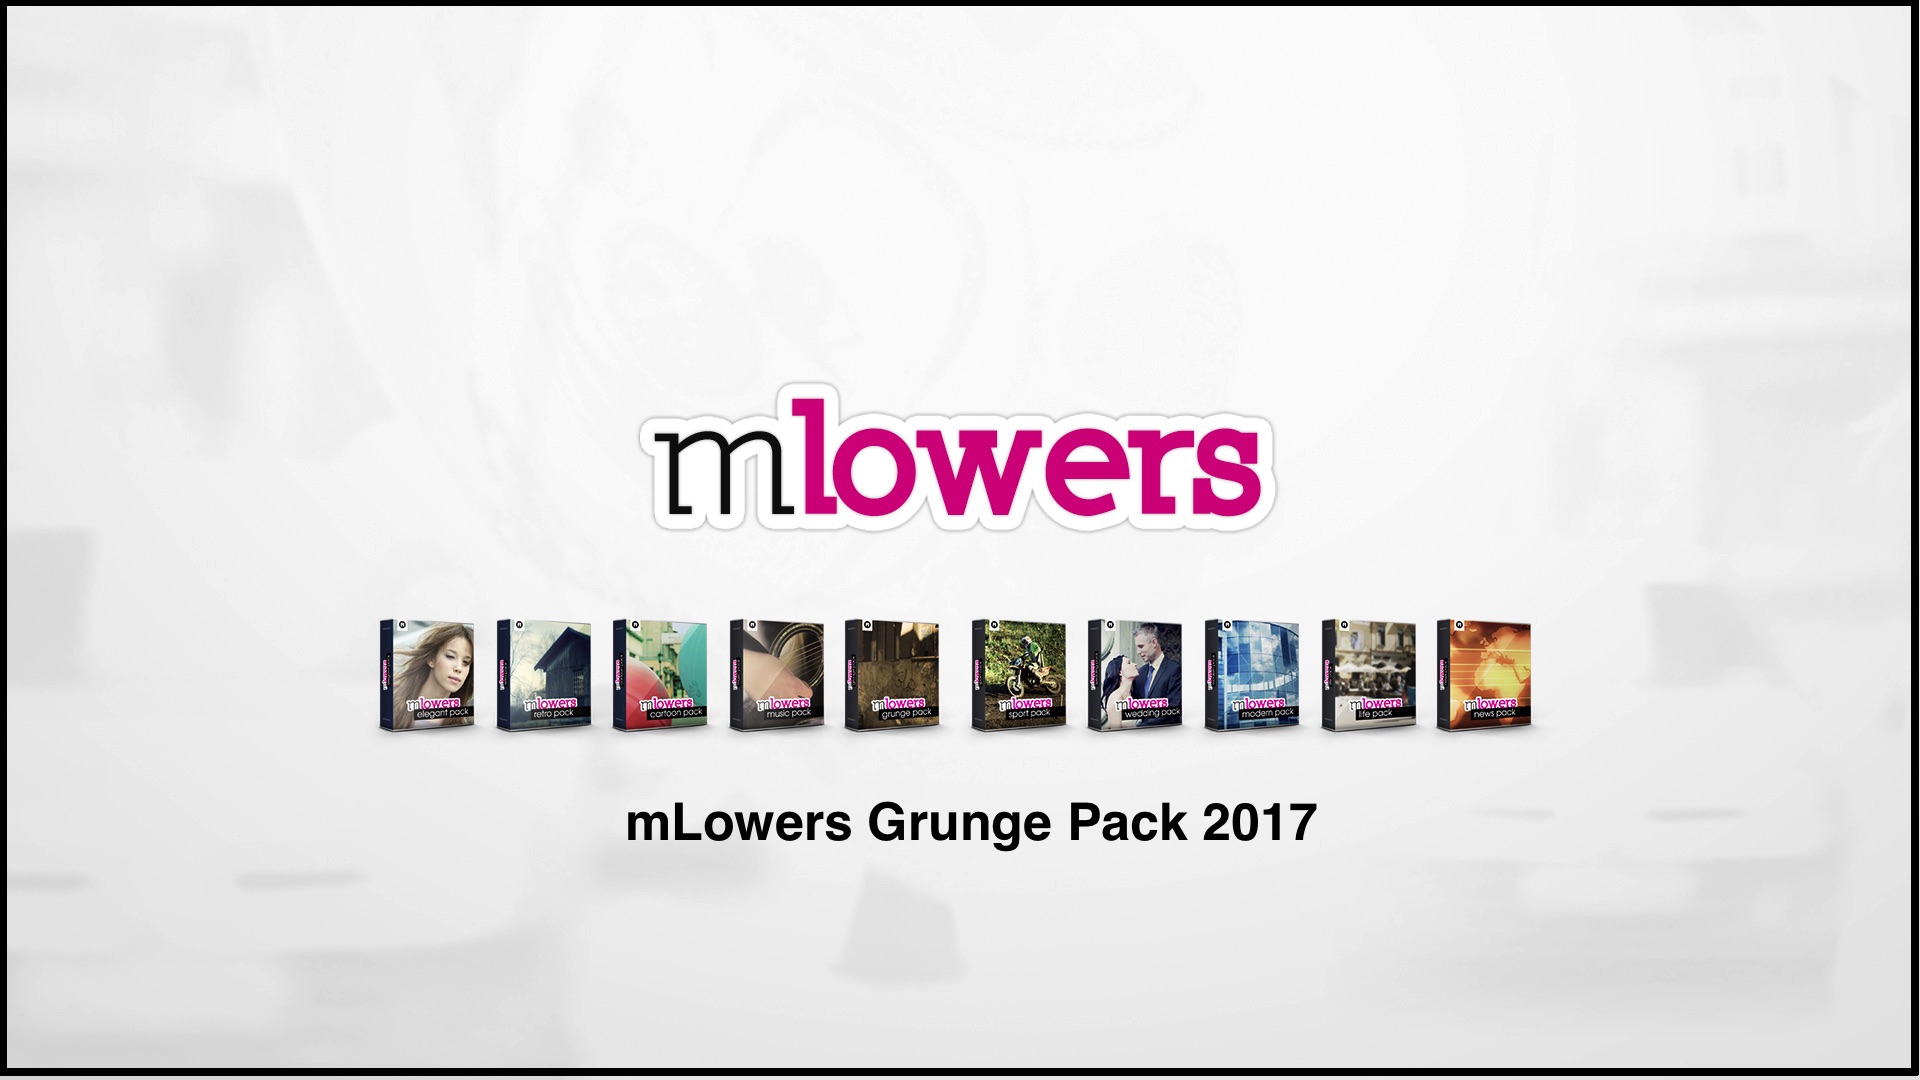 MotionVFX - mLowers Retro Pack download free